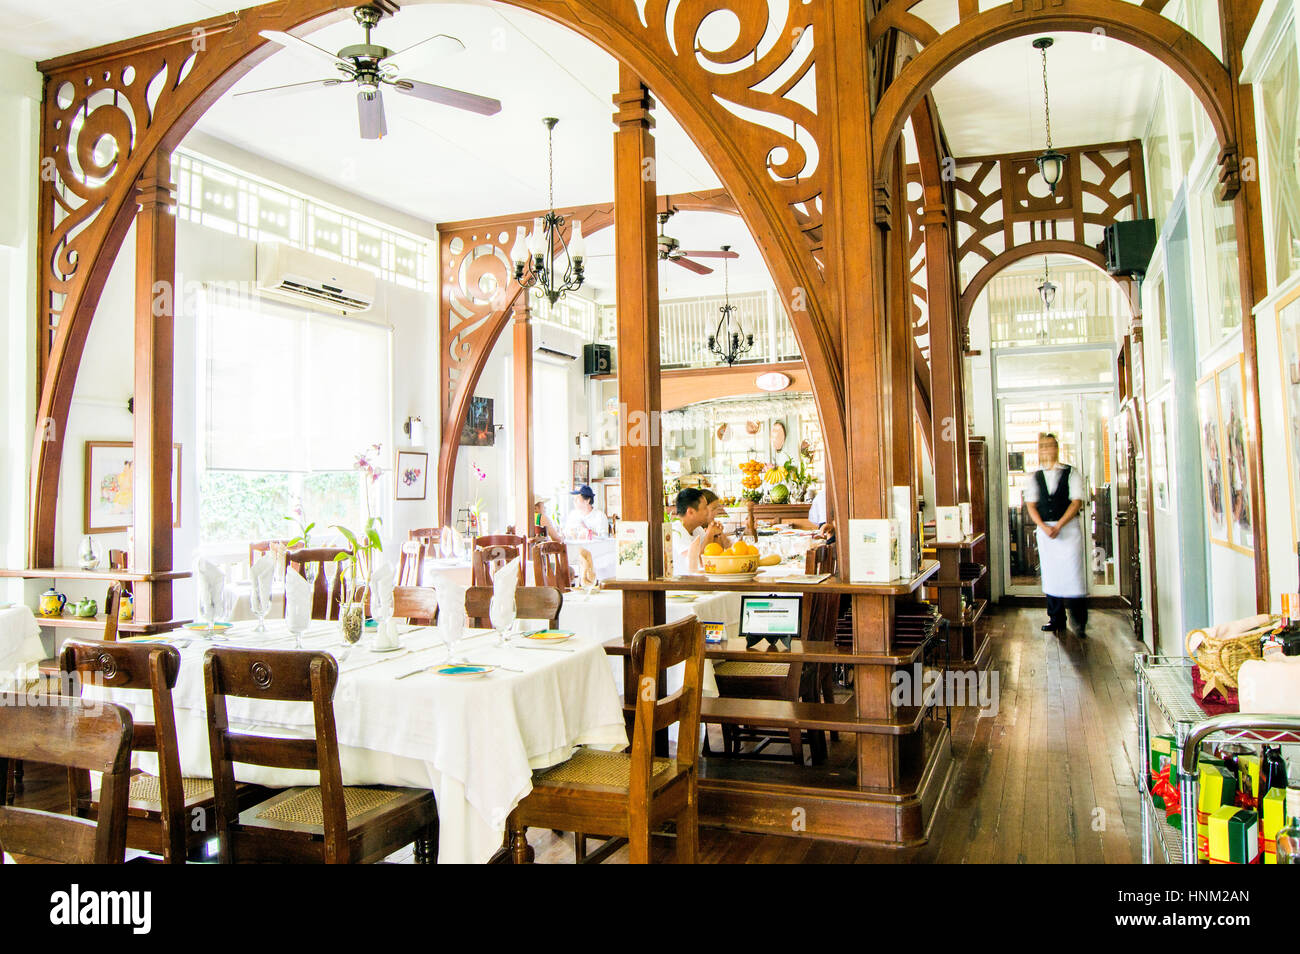 Oboza Heritage House cafe, Rizal Street, Davao, Davao Del Sur, Philippines Stock Photo